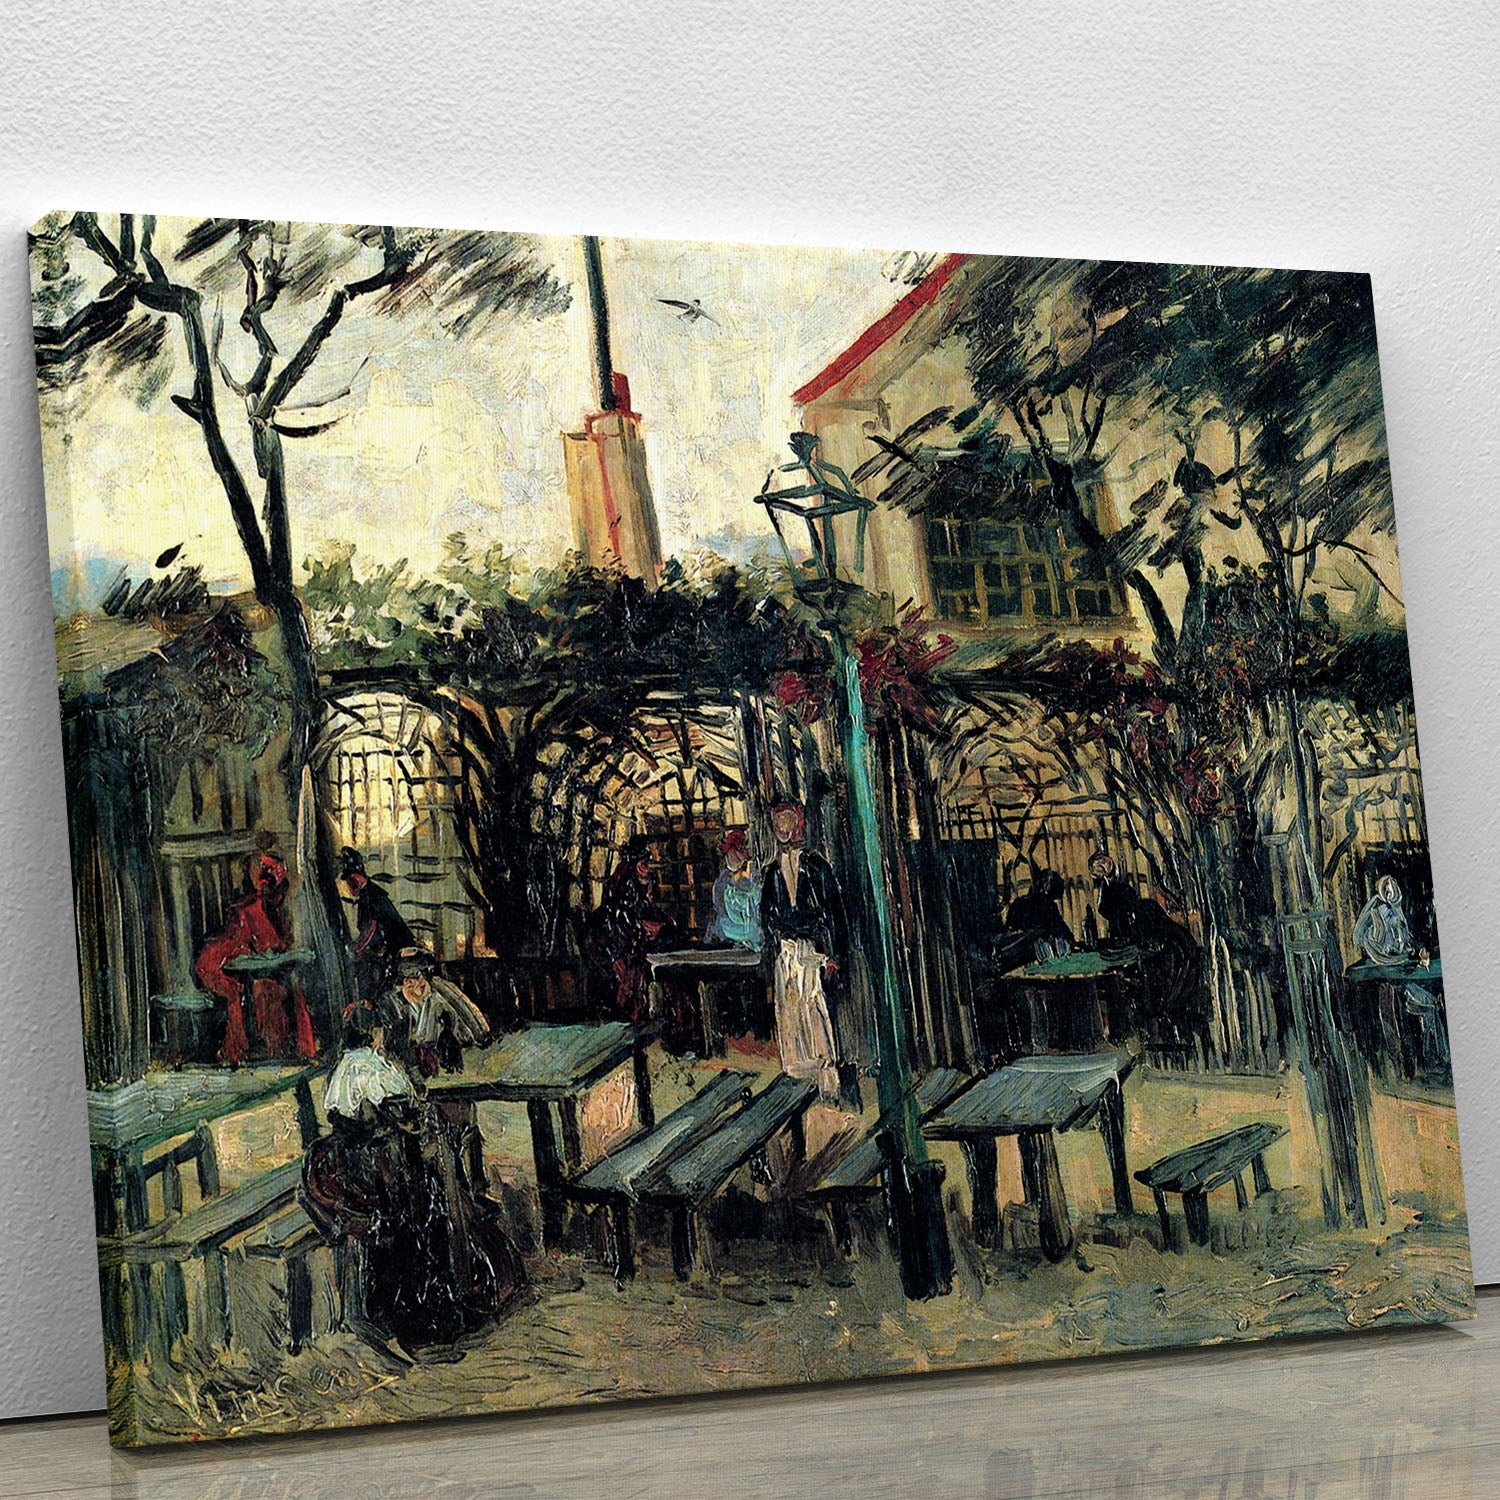 Terrace of a Cafe on Montmartre La Guinguette1 by Van Gogh Canvas Print or Poster - Canvas Art Rocks - 1